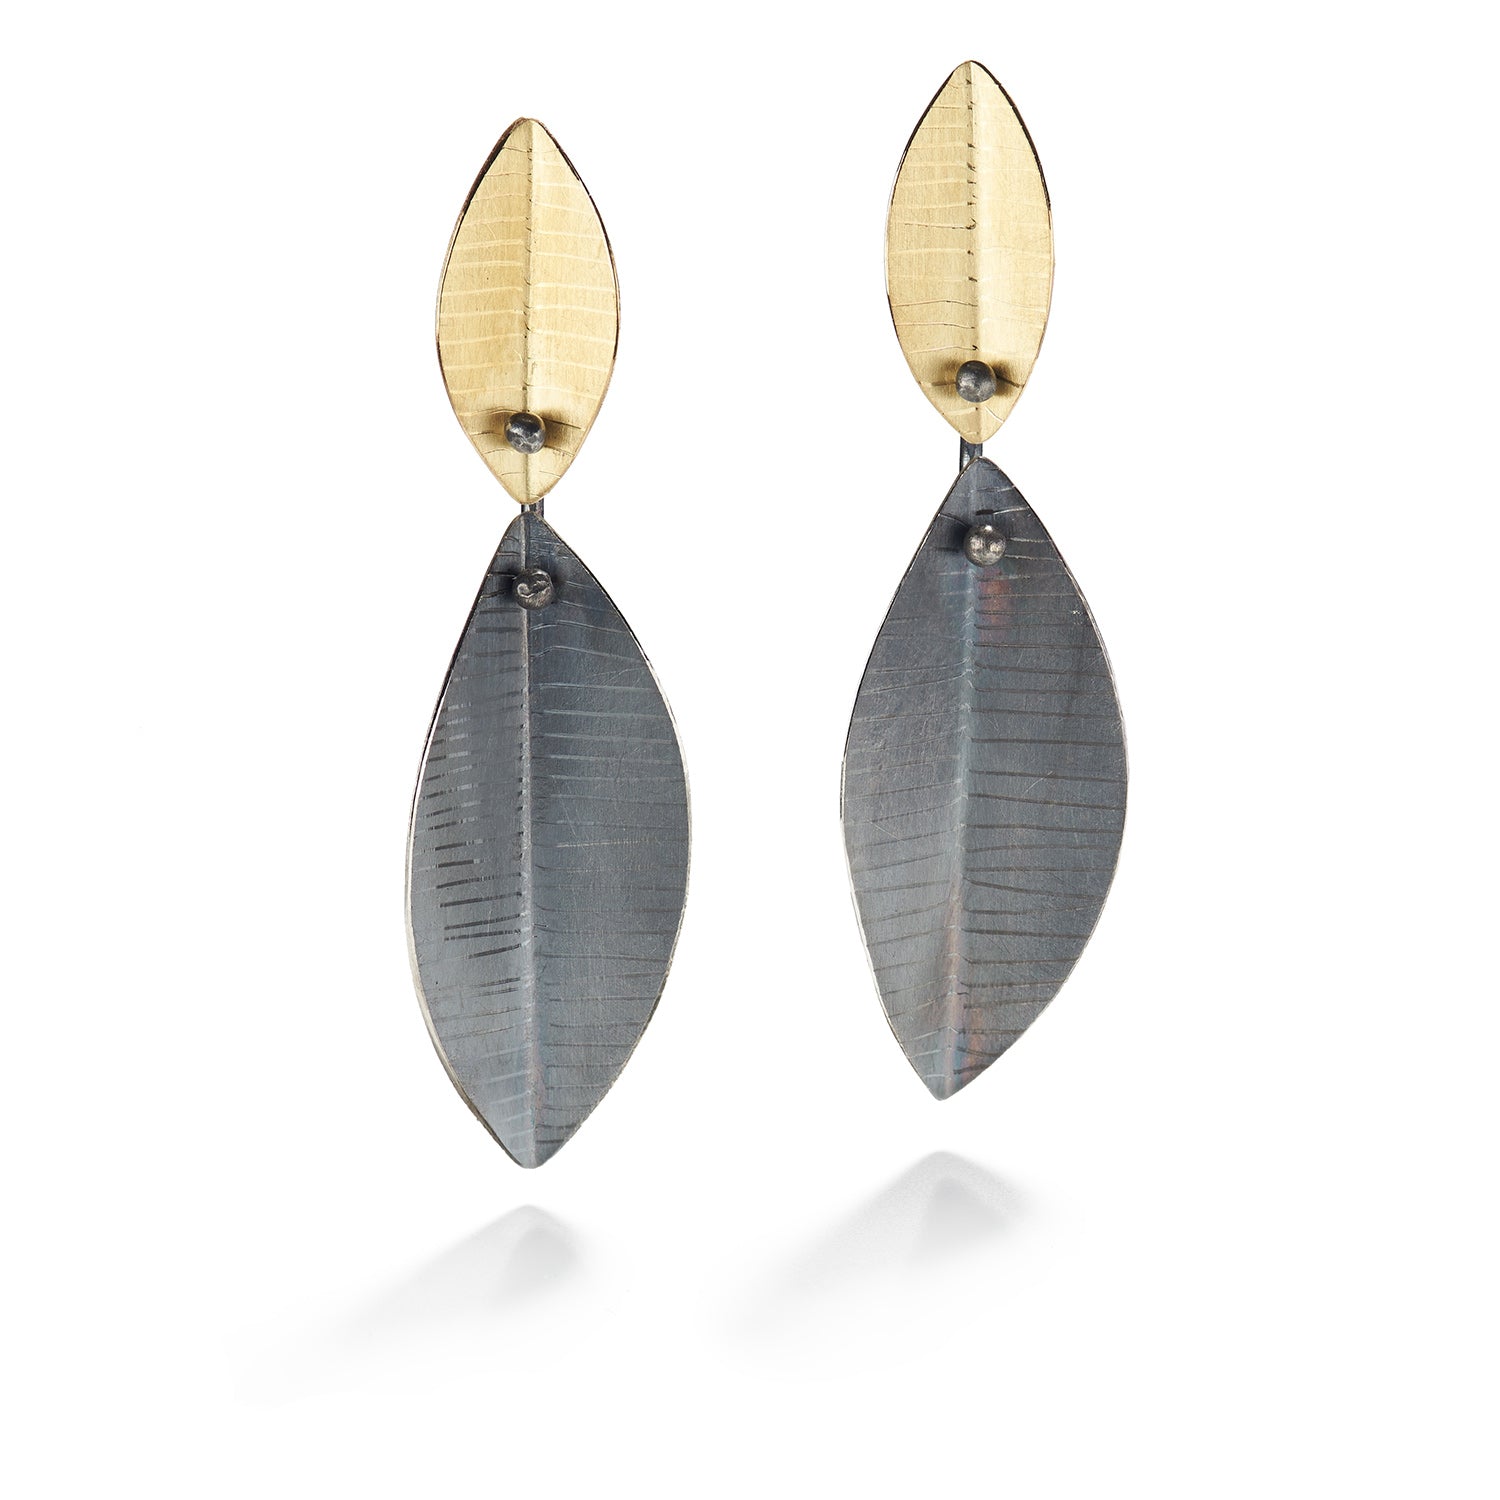 Baladre Silver & Gold Earrings